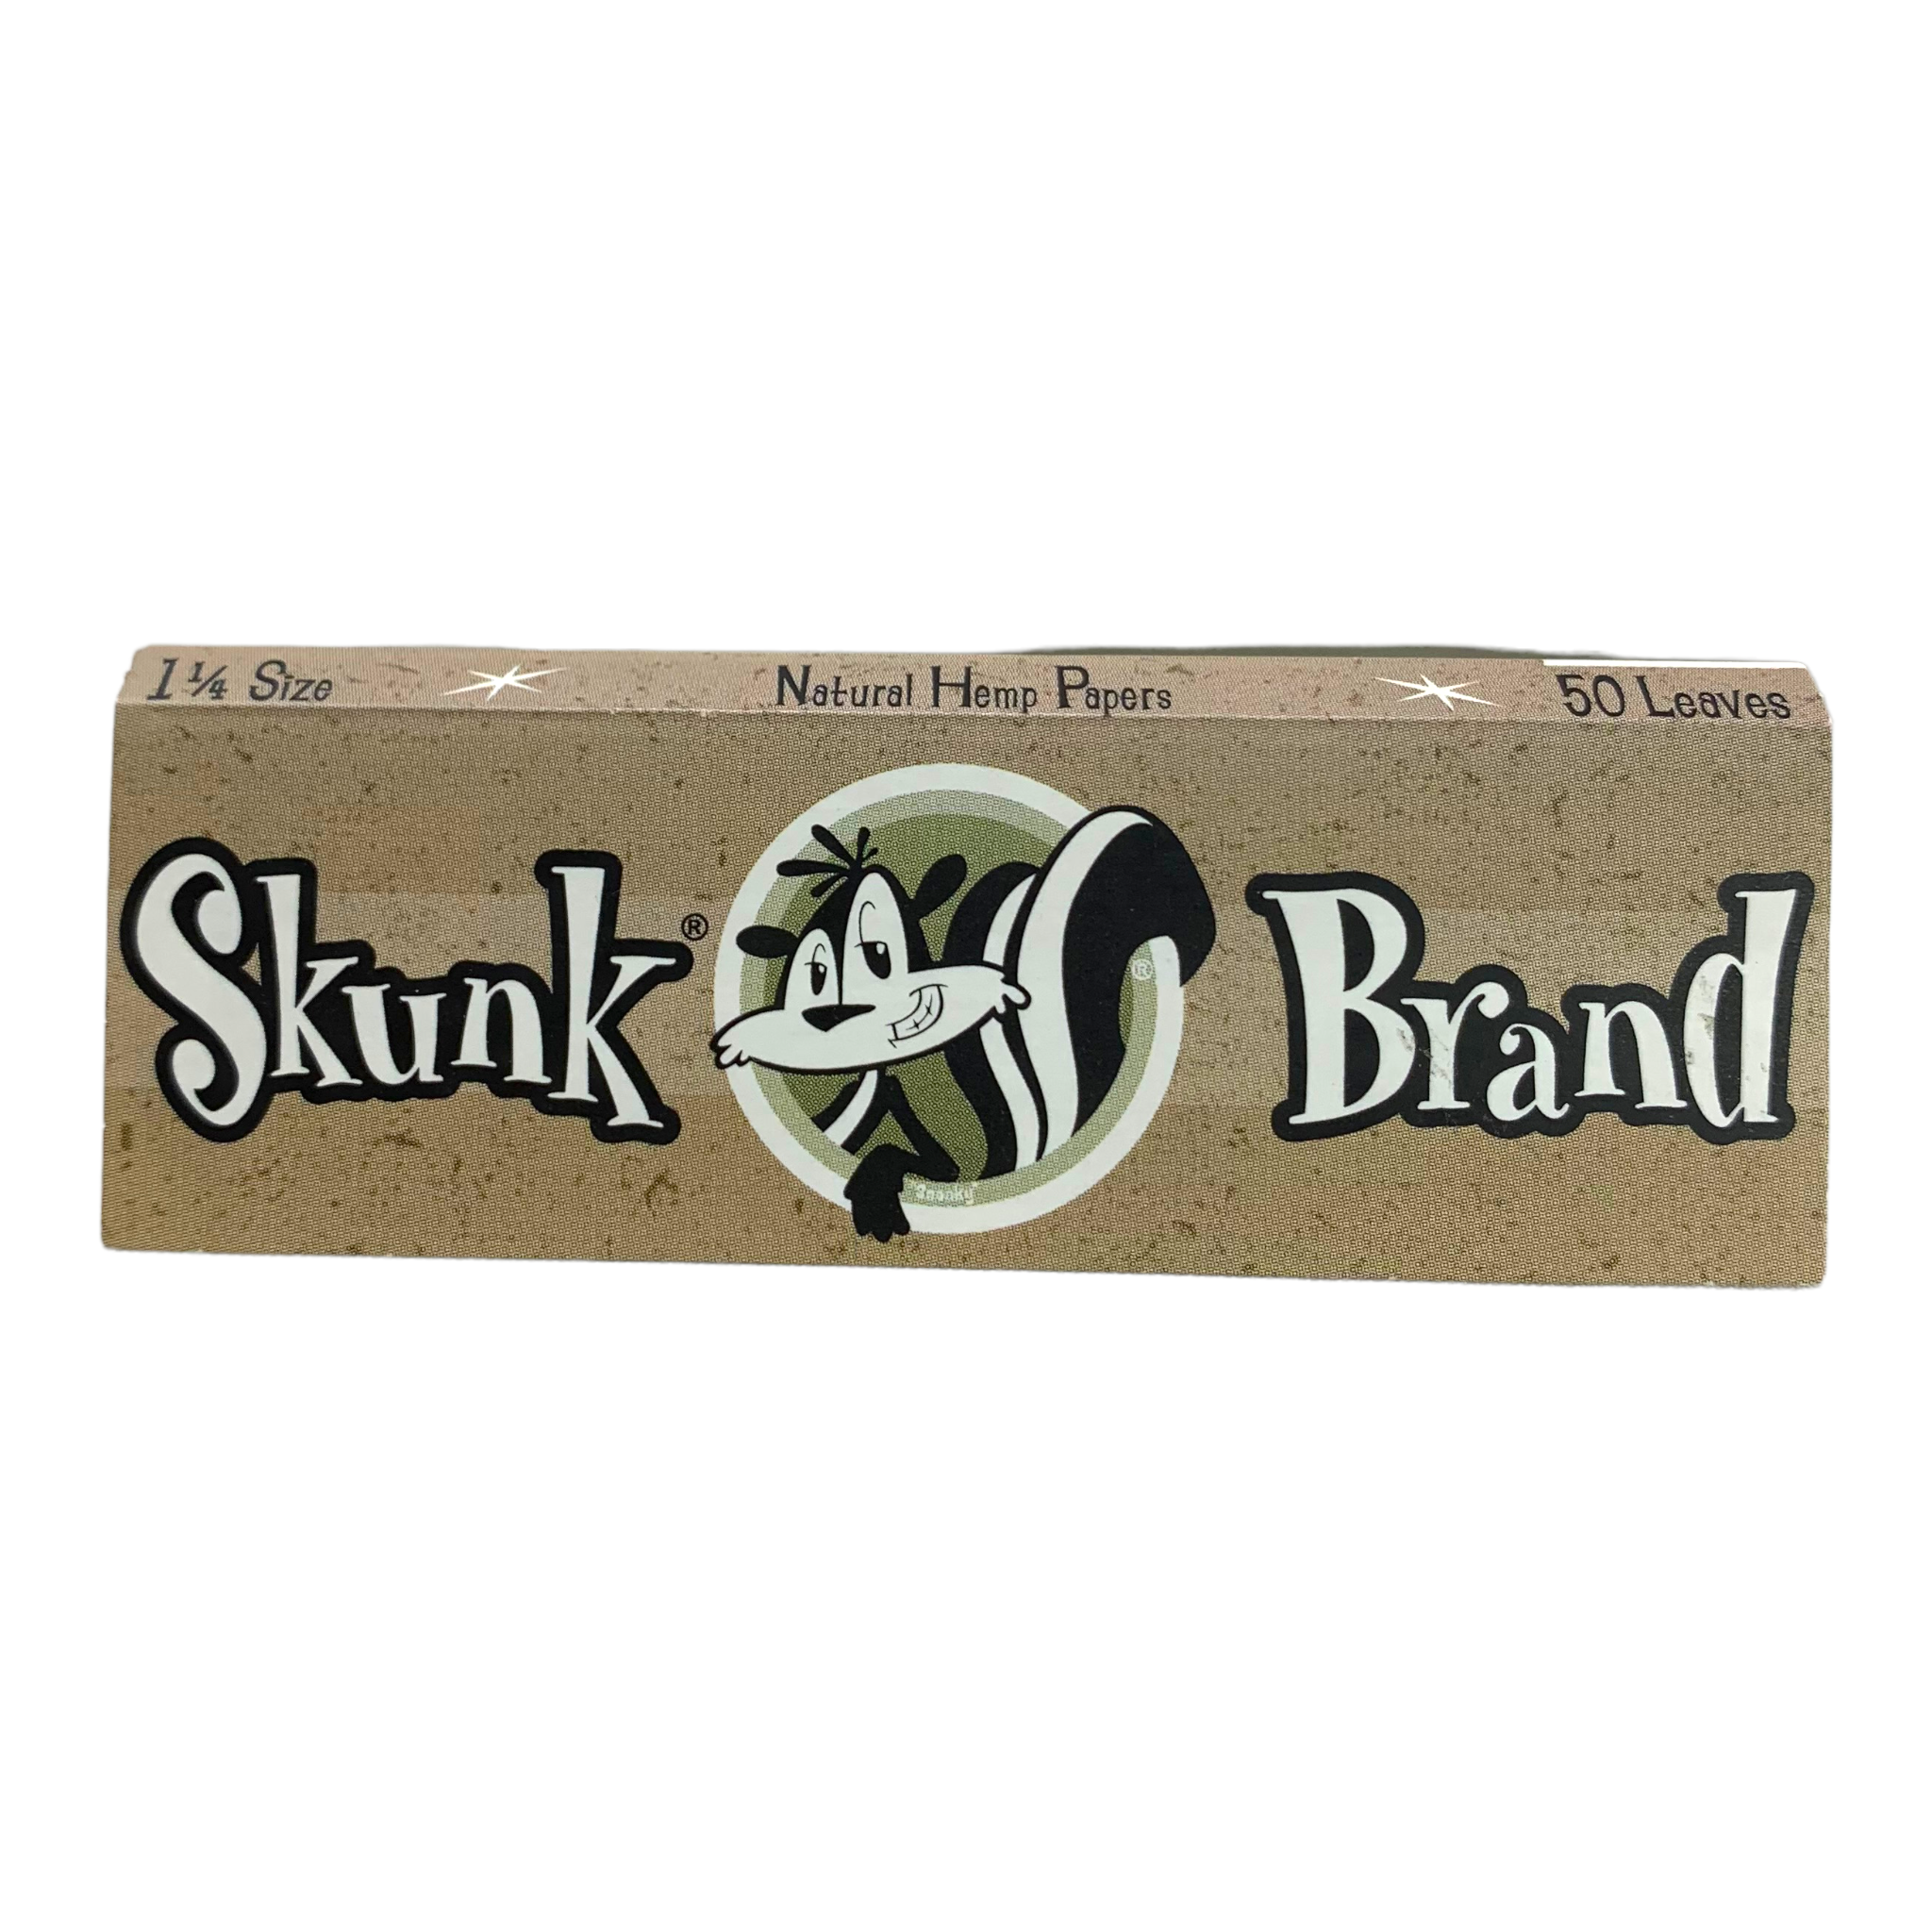 Skunk Brand Papers